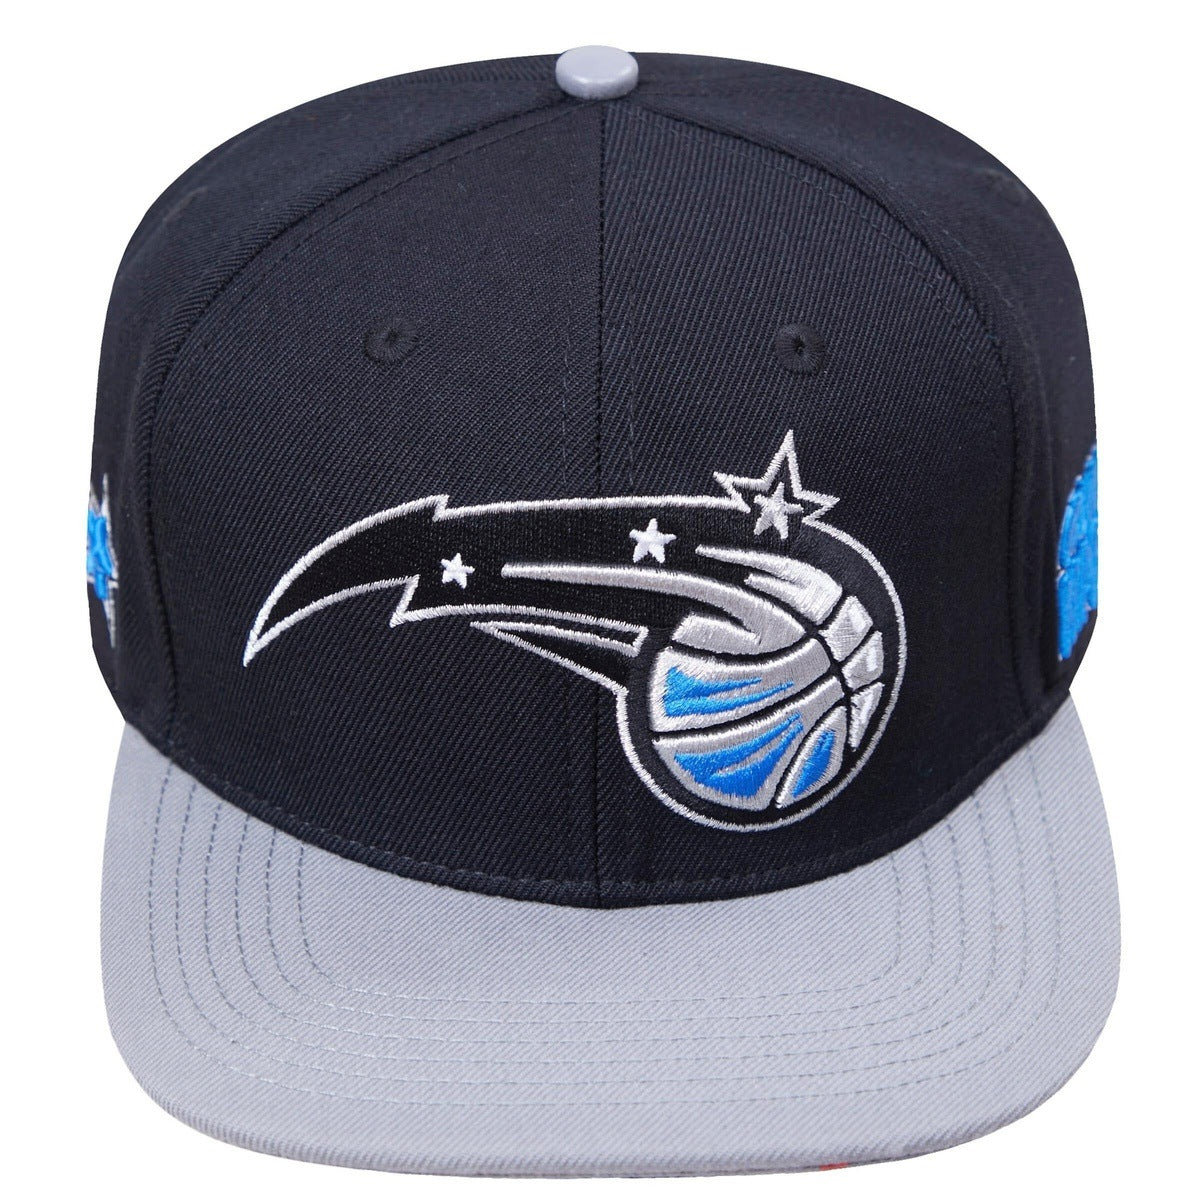 NBA ORLANDO MAGIC RETRO CLASSIC UNISEX PRIMARY LOGO WOOL SNAPBACK HAT (BLACK/GRAY)